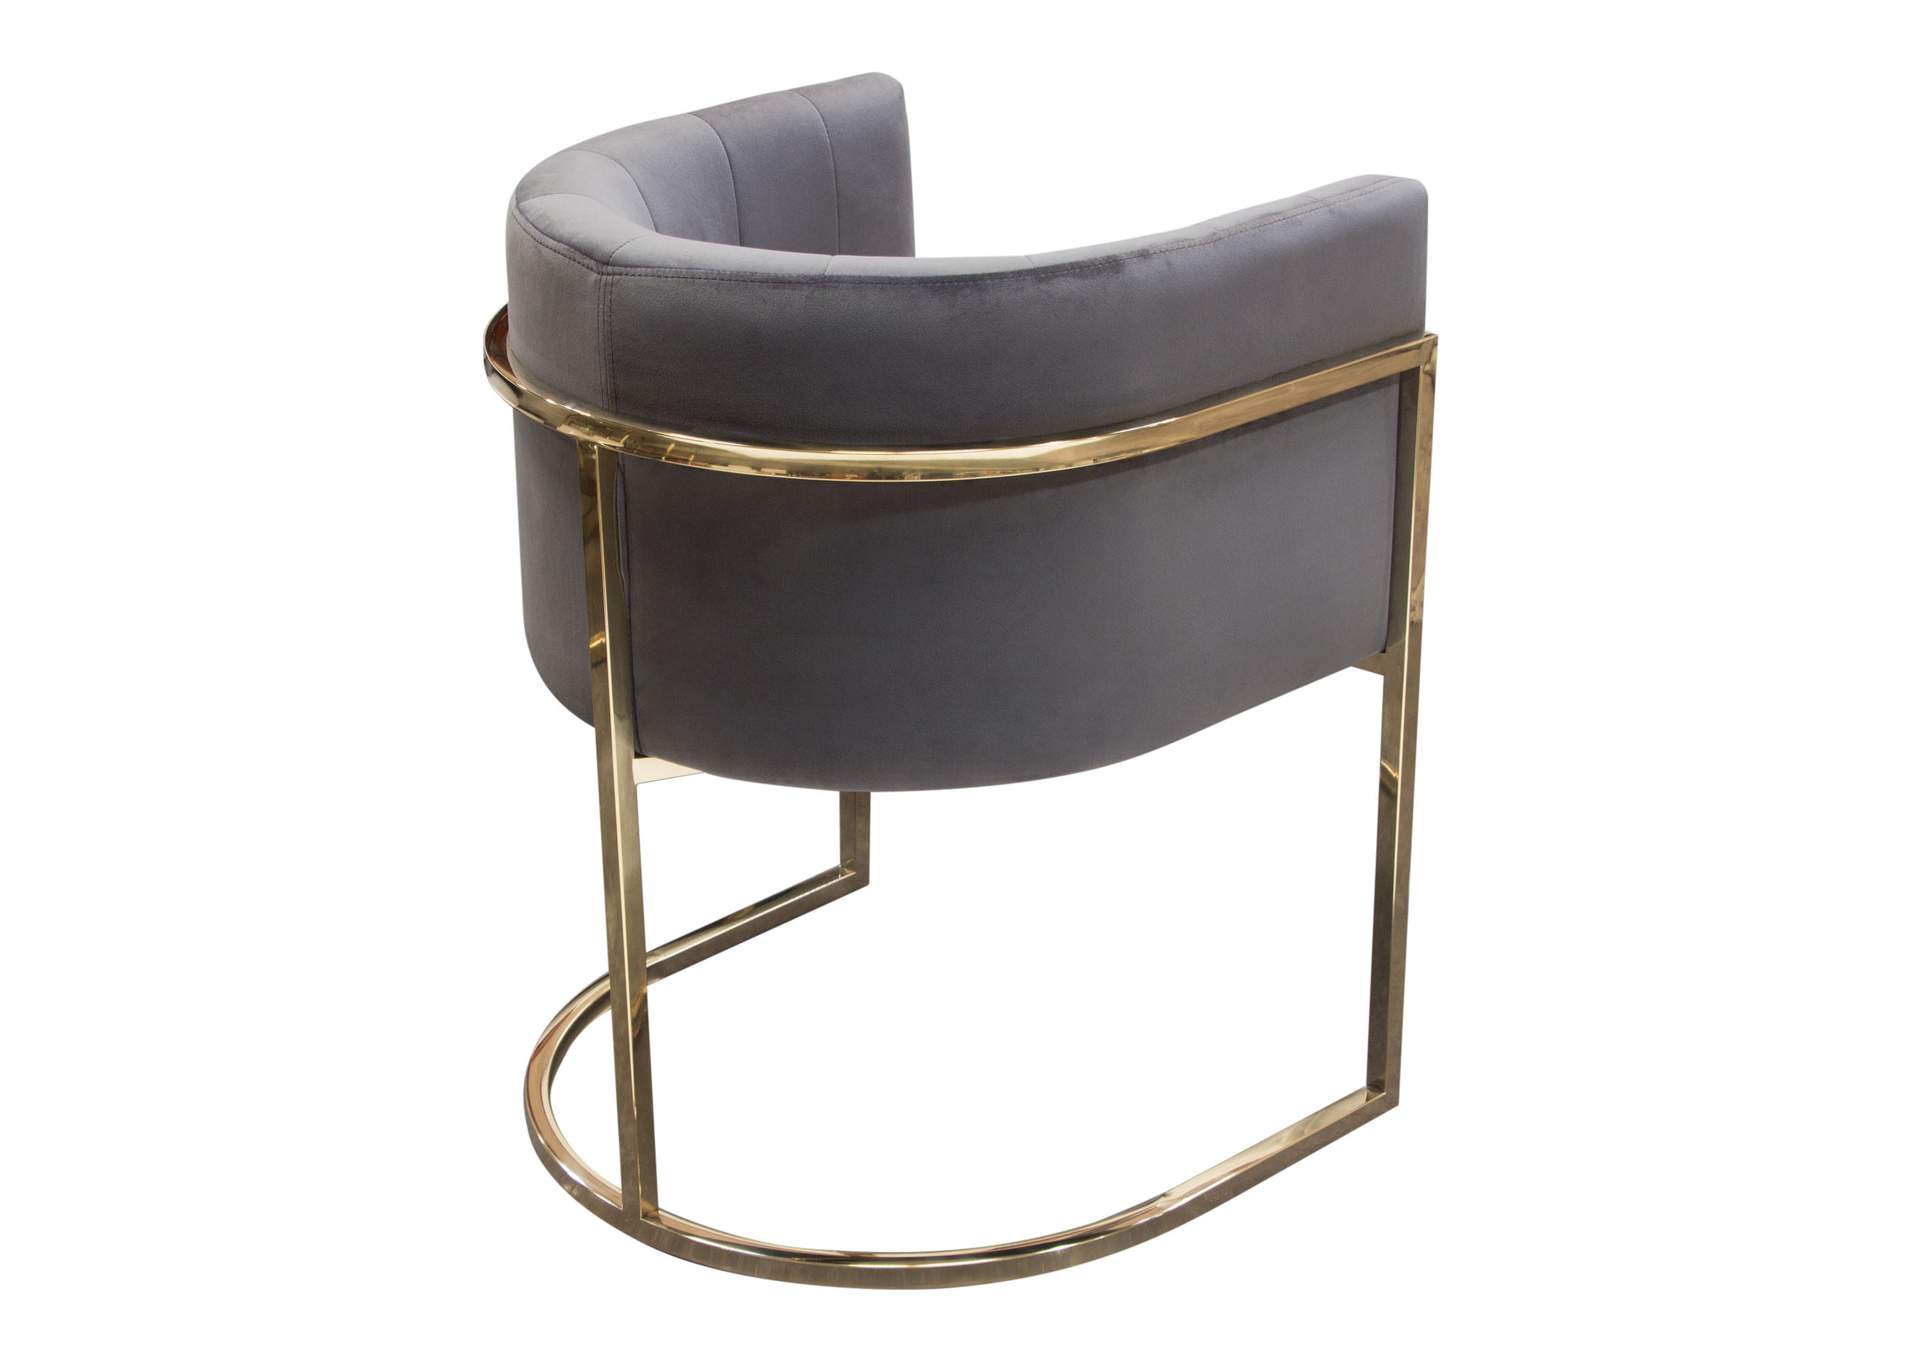 Pandora Dining Chair in Grey Velvet with Polished Gold Frame by Diamond Sofa,Diamond Sofa